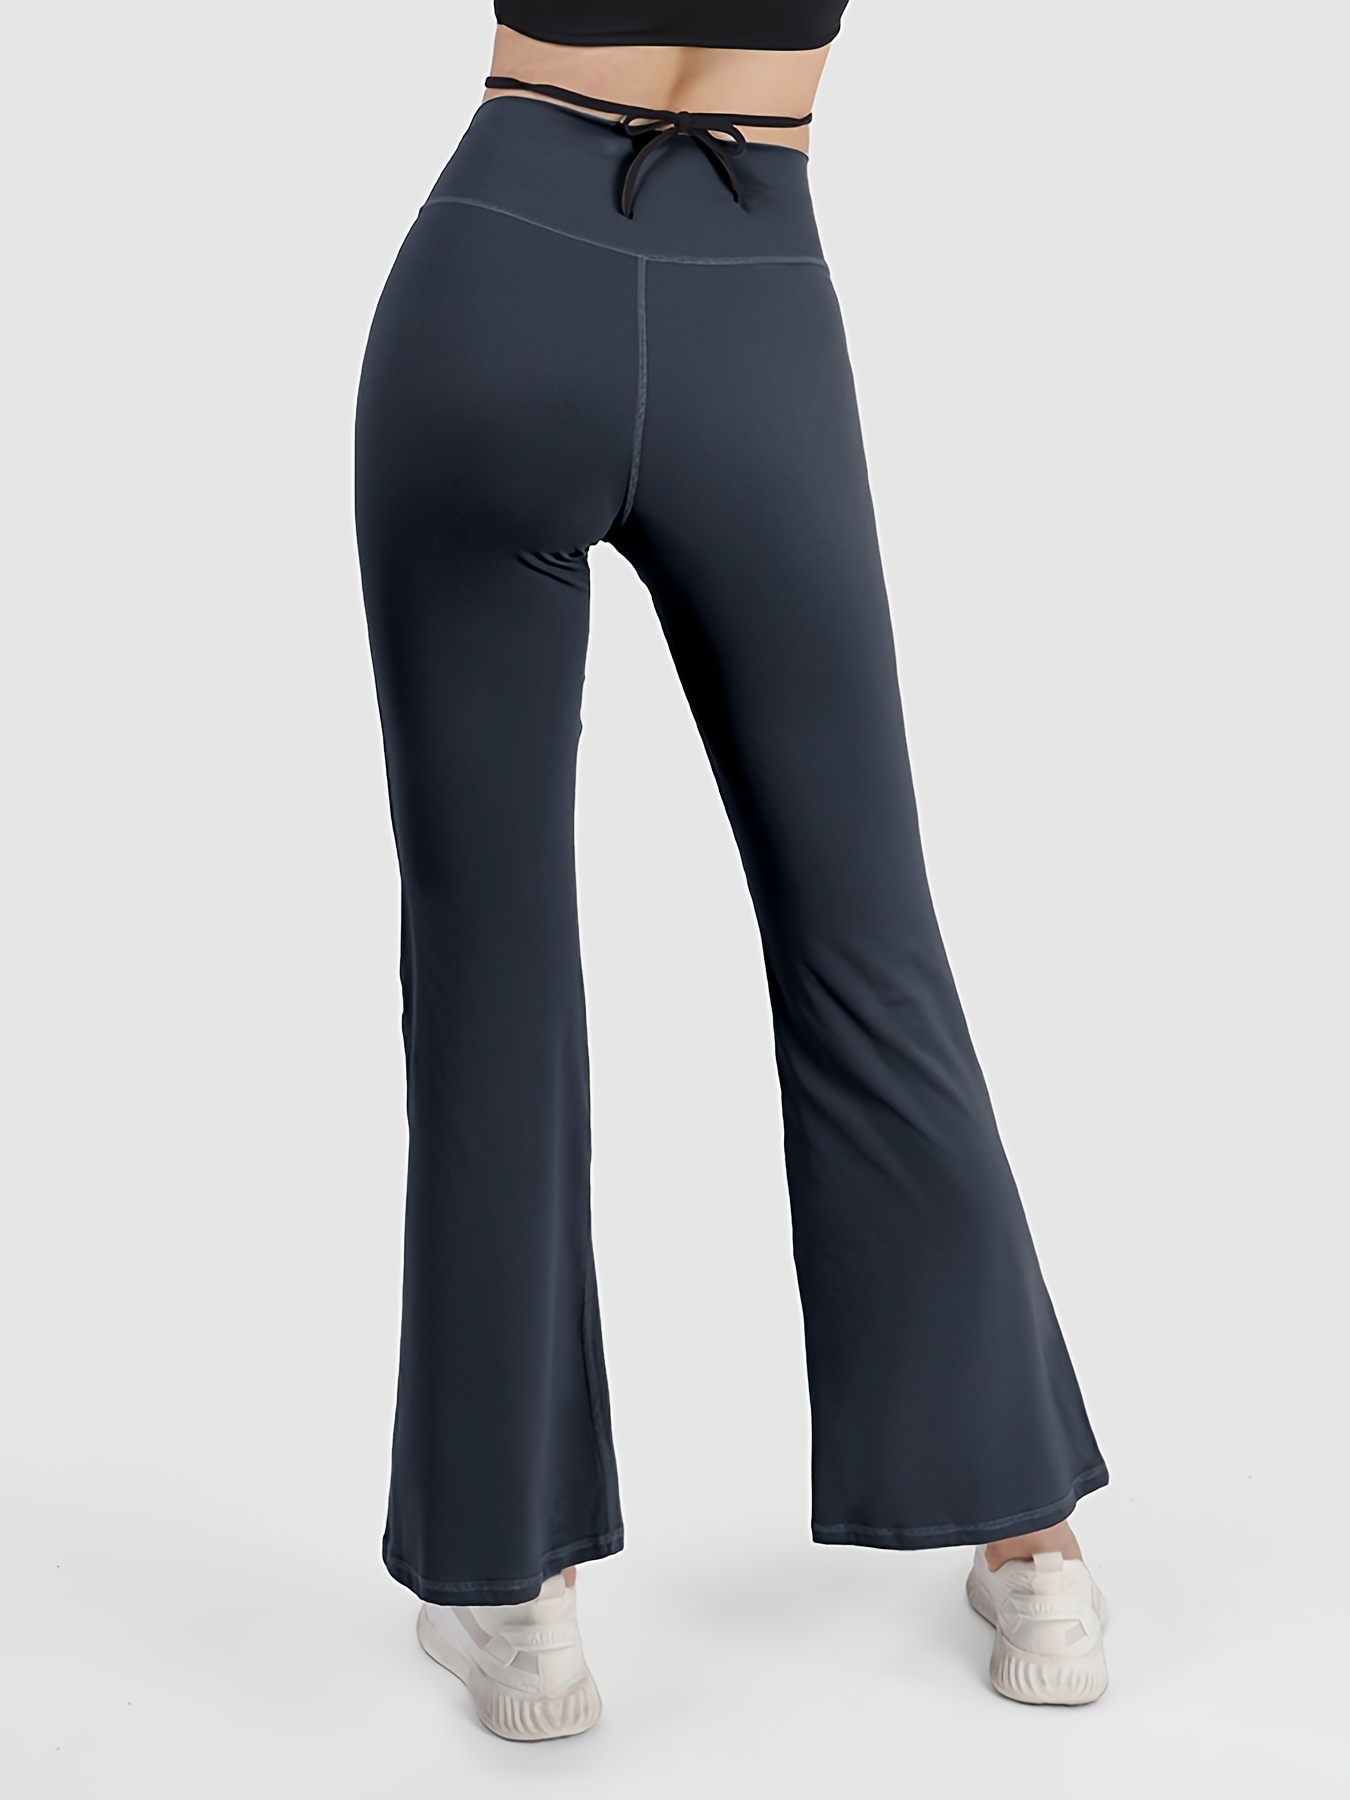 cllios Yoga Pants for Women Bootcut Legging Gym High Wiast Pants Stretch  Butt Lift Trousers Print Tall Long Pants 